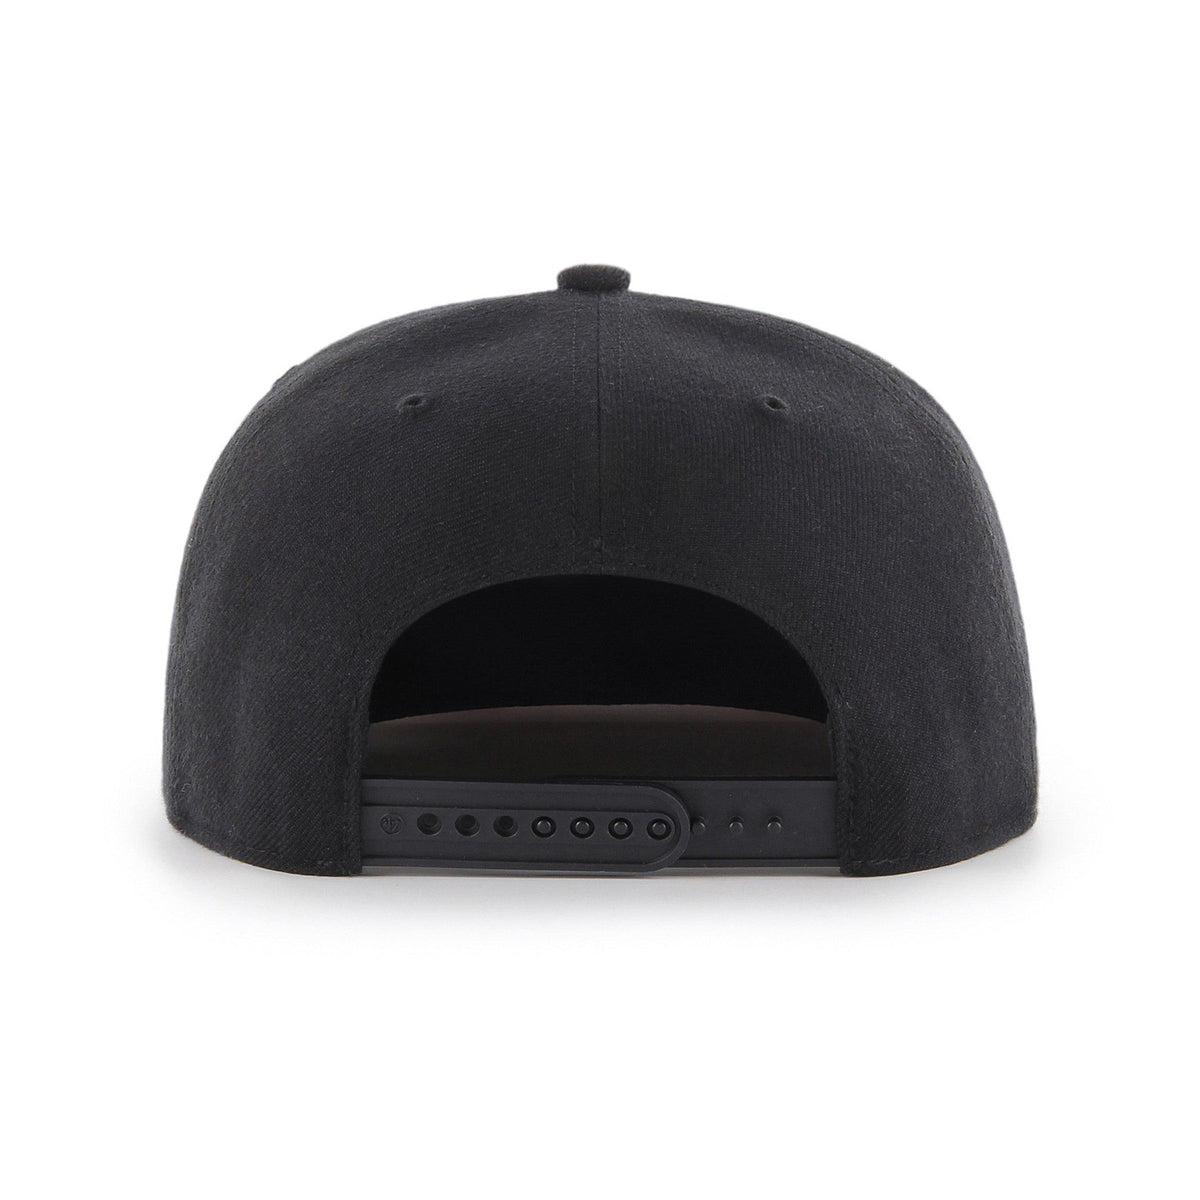 Stool Star flatback hat 47 brand – Barstool Sports Store1200 x 1200